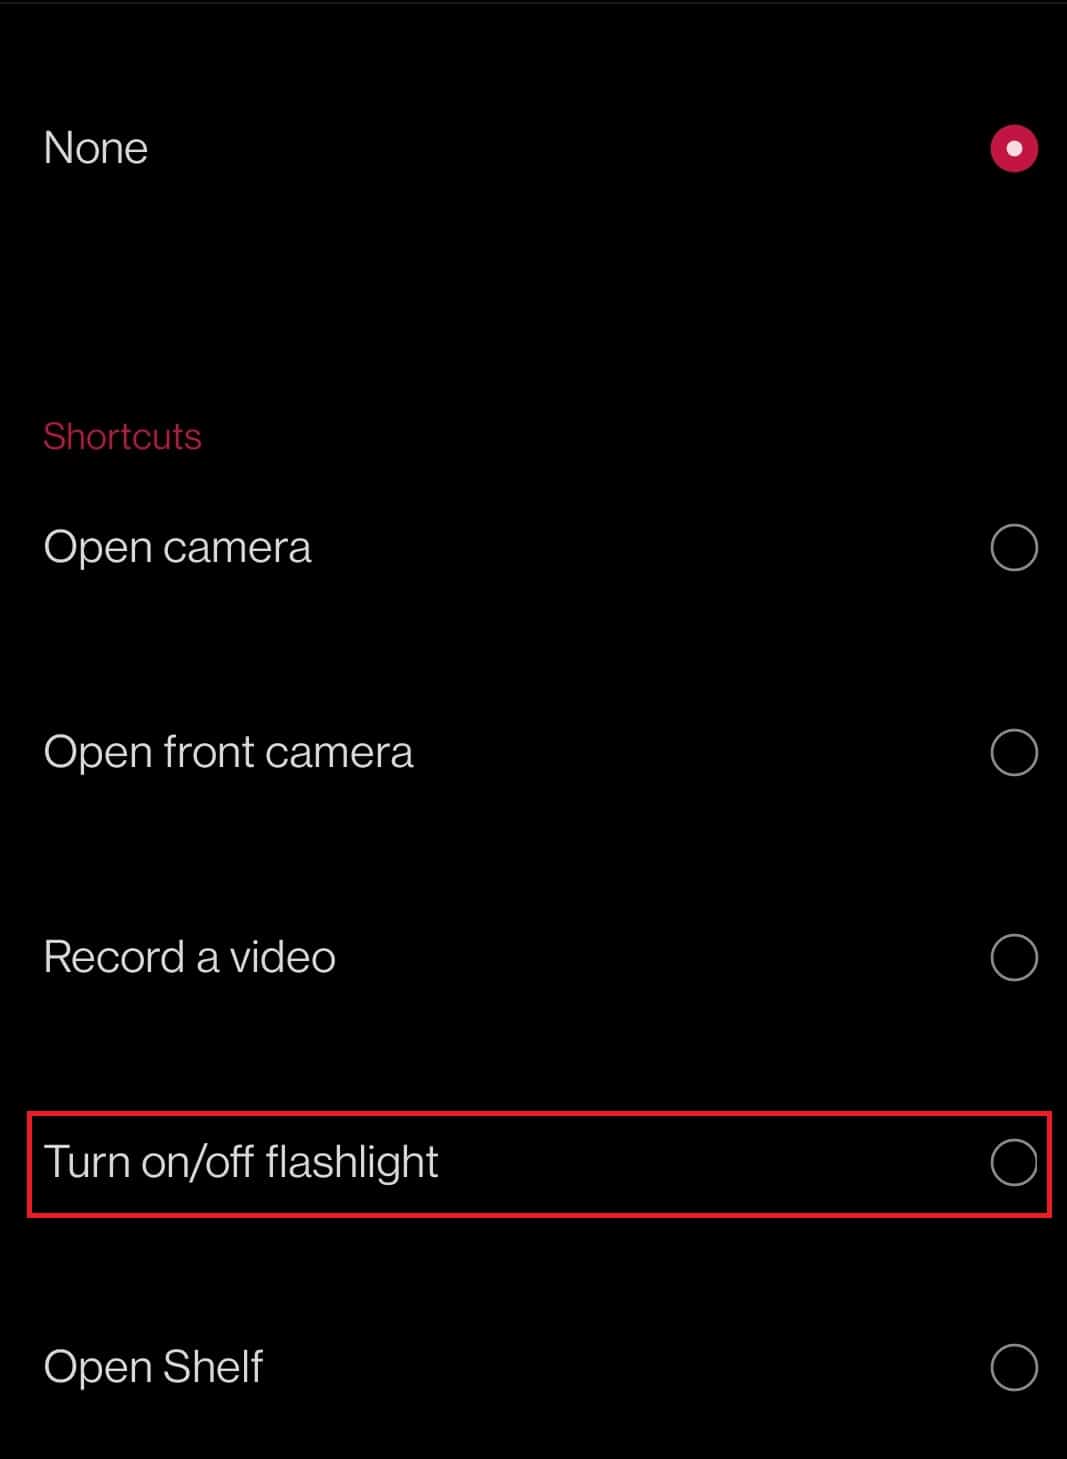 Tap the option Turn on/off flashlight.